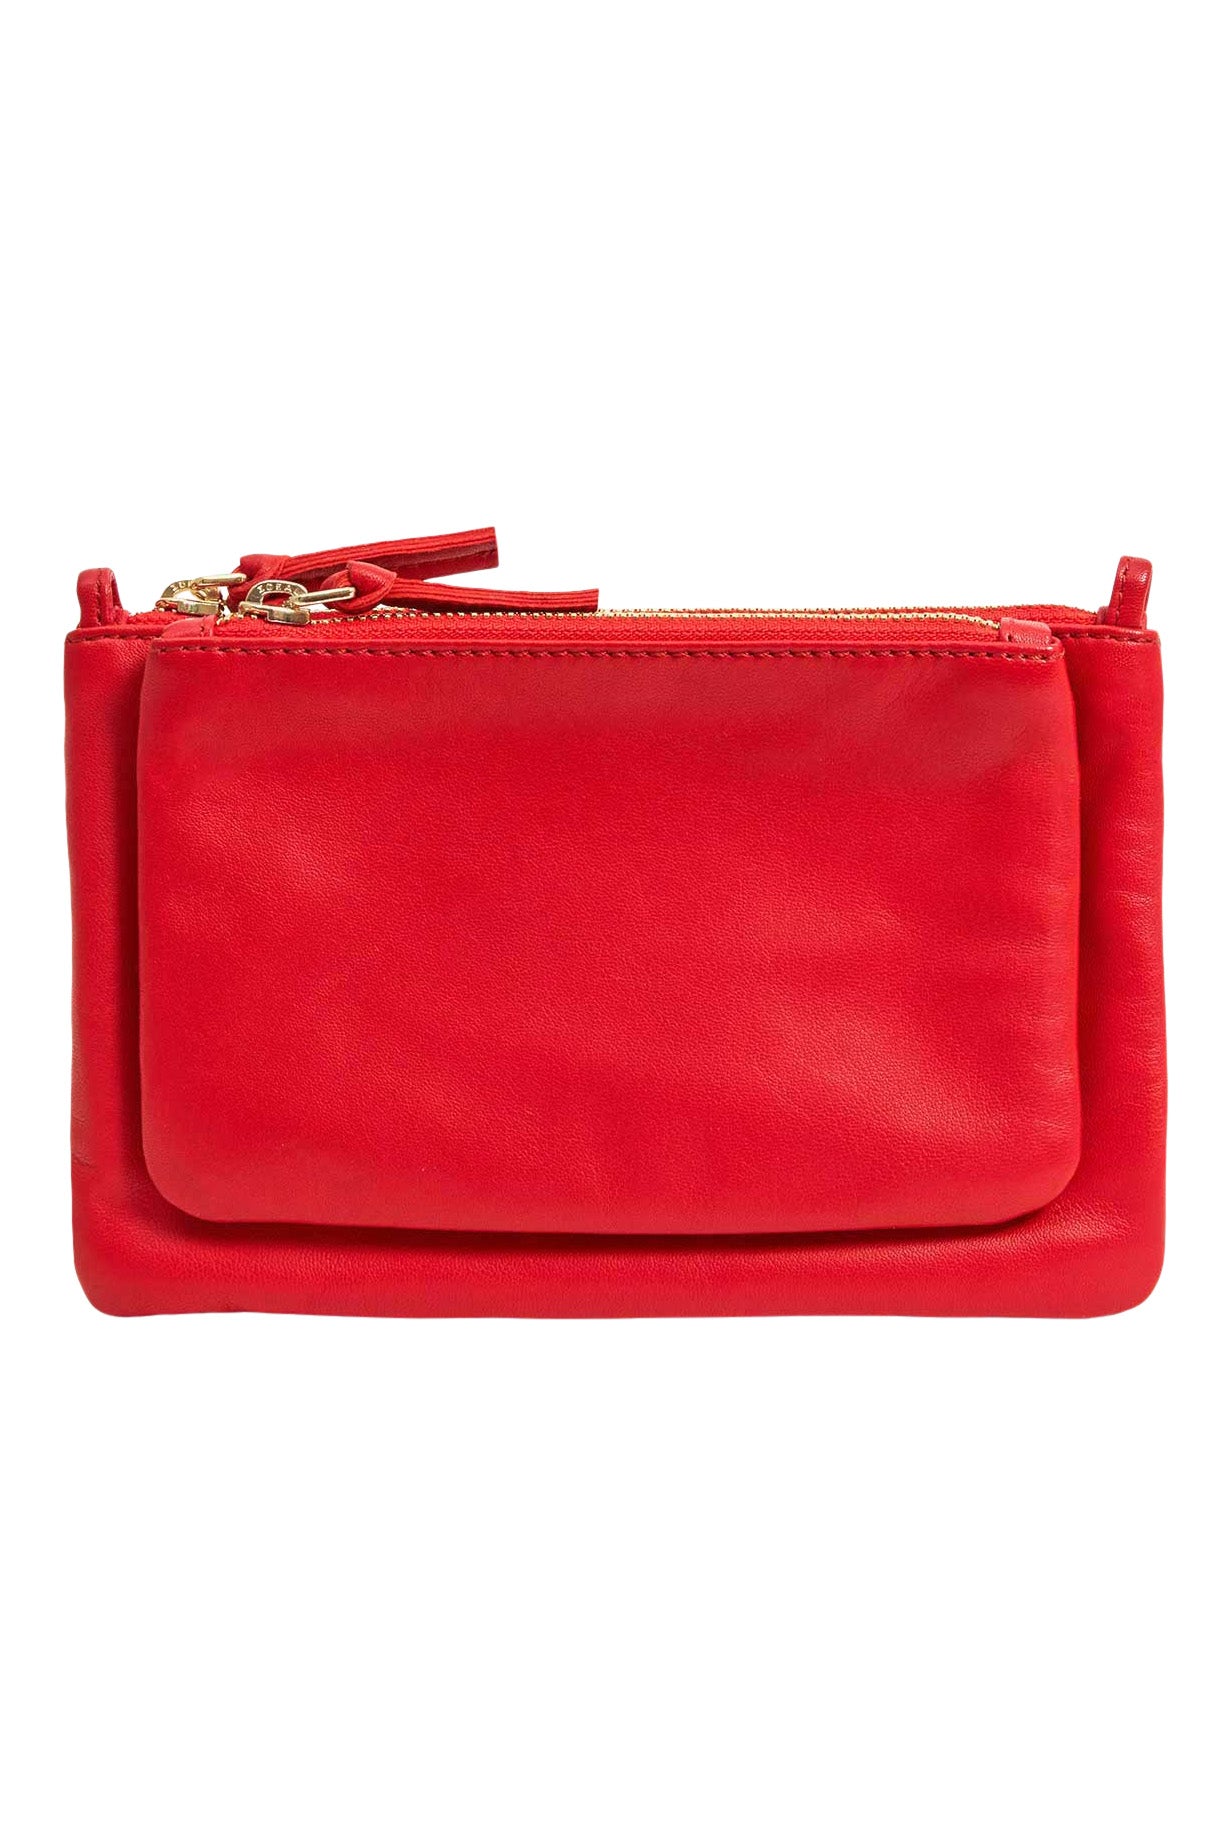 Clare V. Handbags, Purses & Wallets for Women